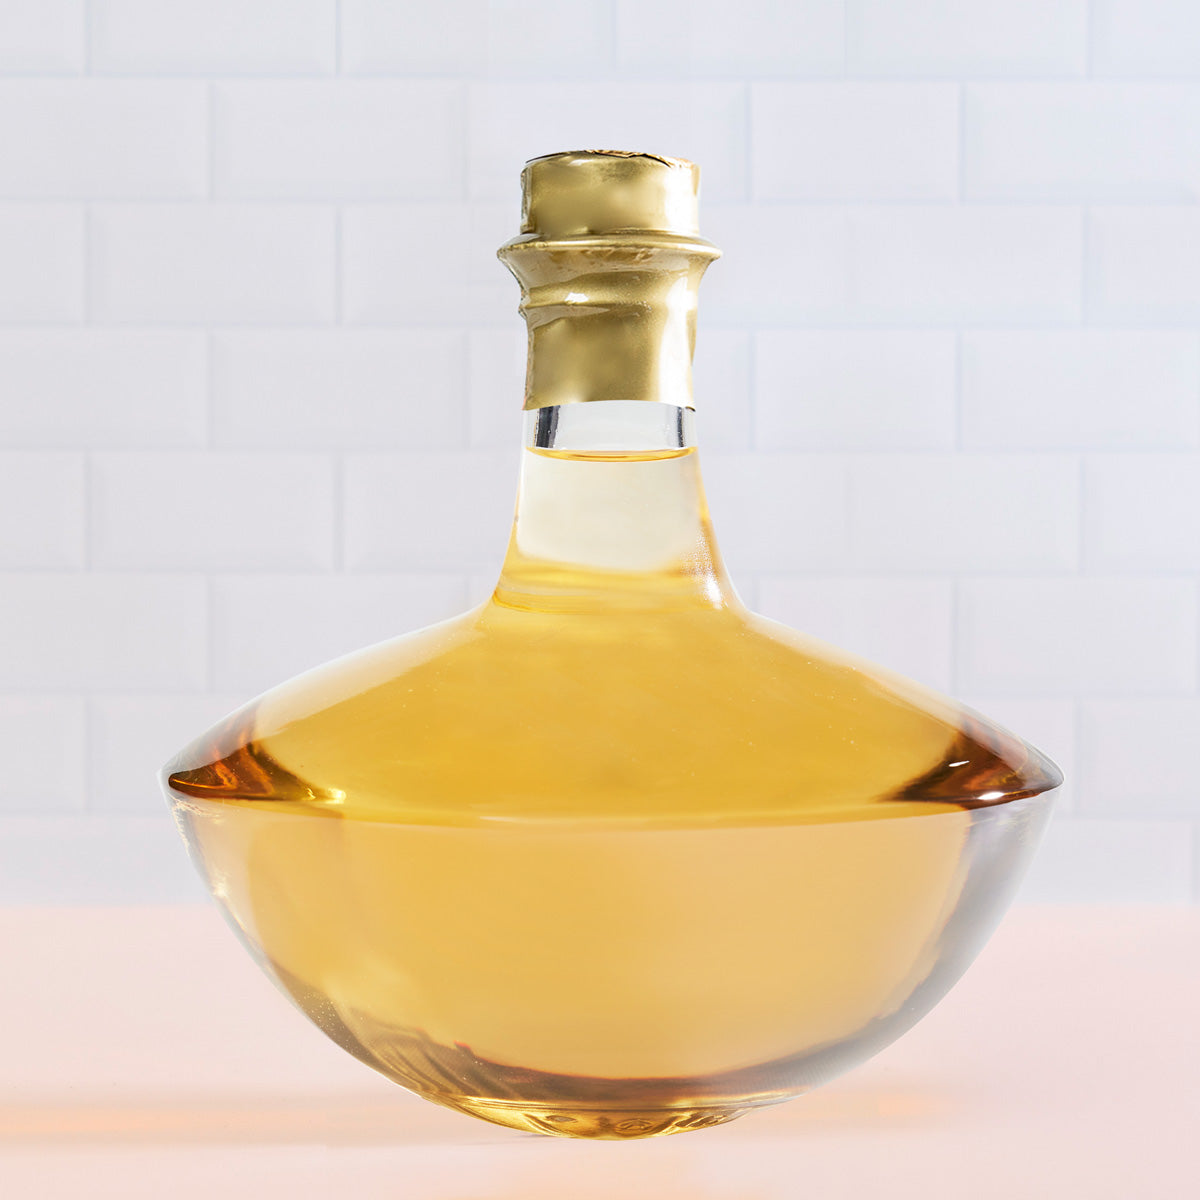 Limited Edition Tipsy Bottle 700ml - Butterscotch Liqueur (Gift Box Not Included) - Flaschengeist (Aust) Pty Ltd